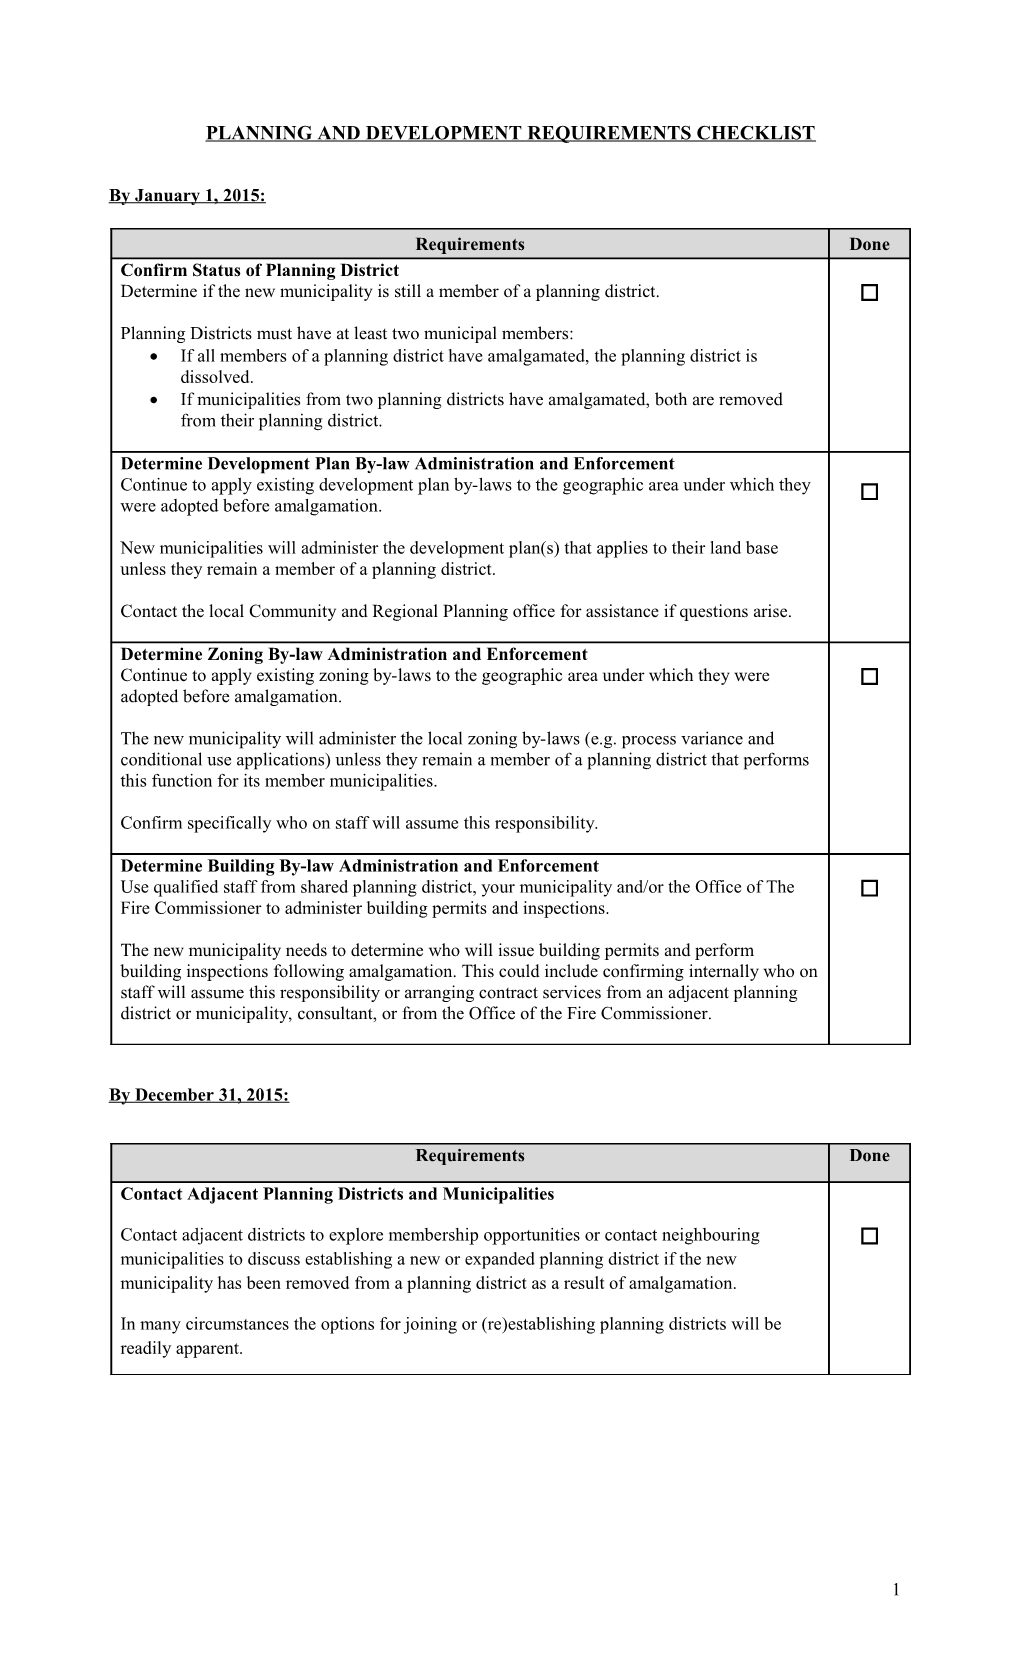 Planning and Development Requirements Checklist